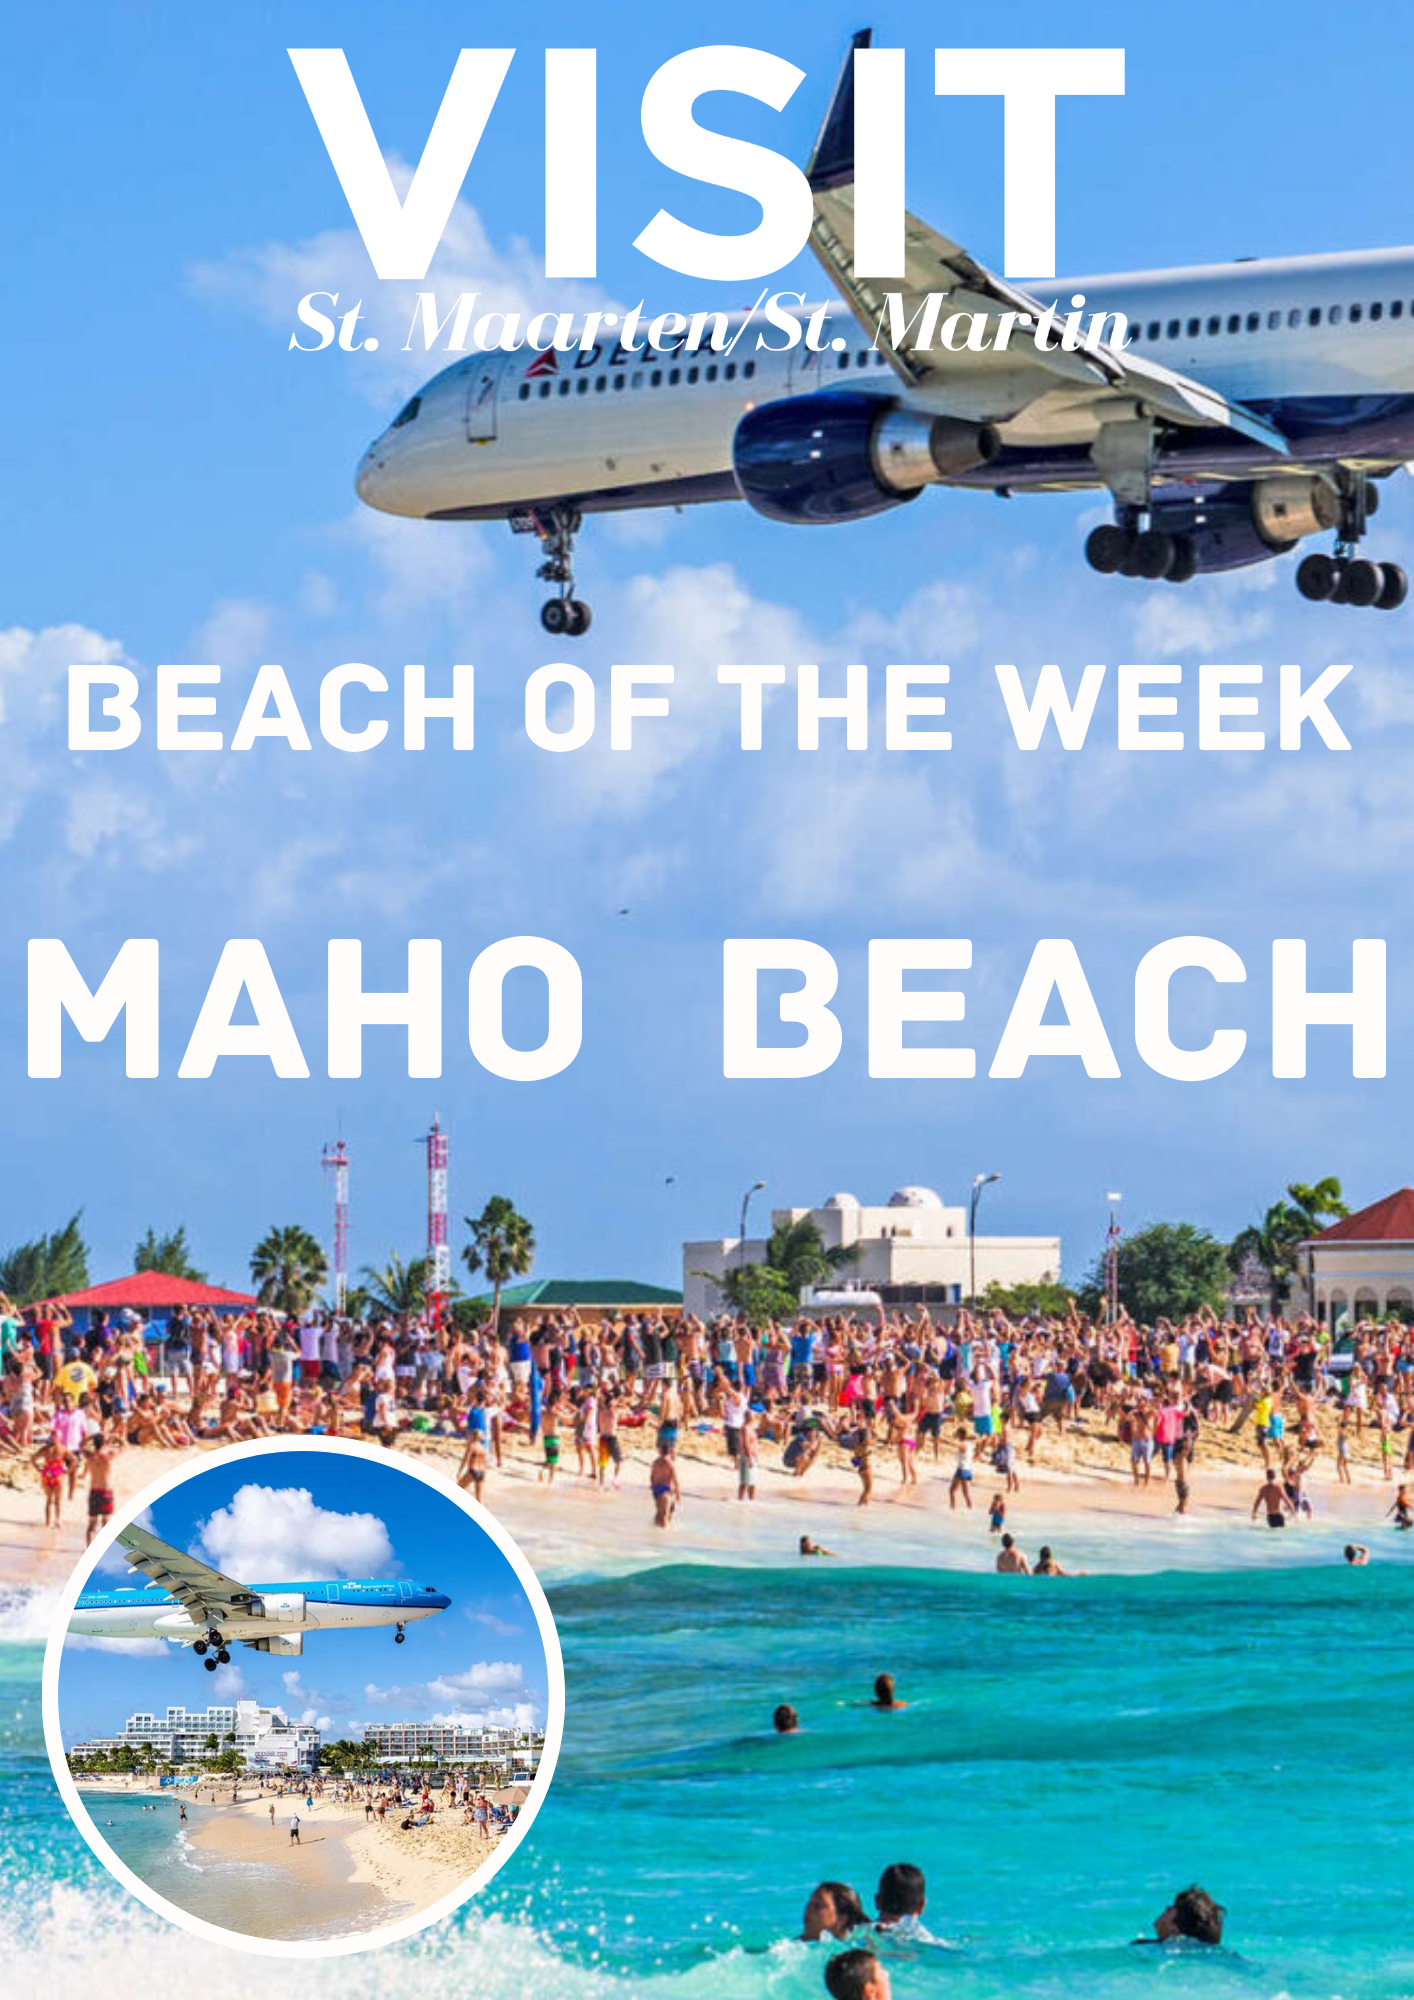 Maho Beach, Airport Beach, Flights to St Maarten